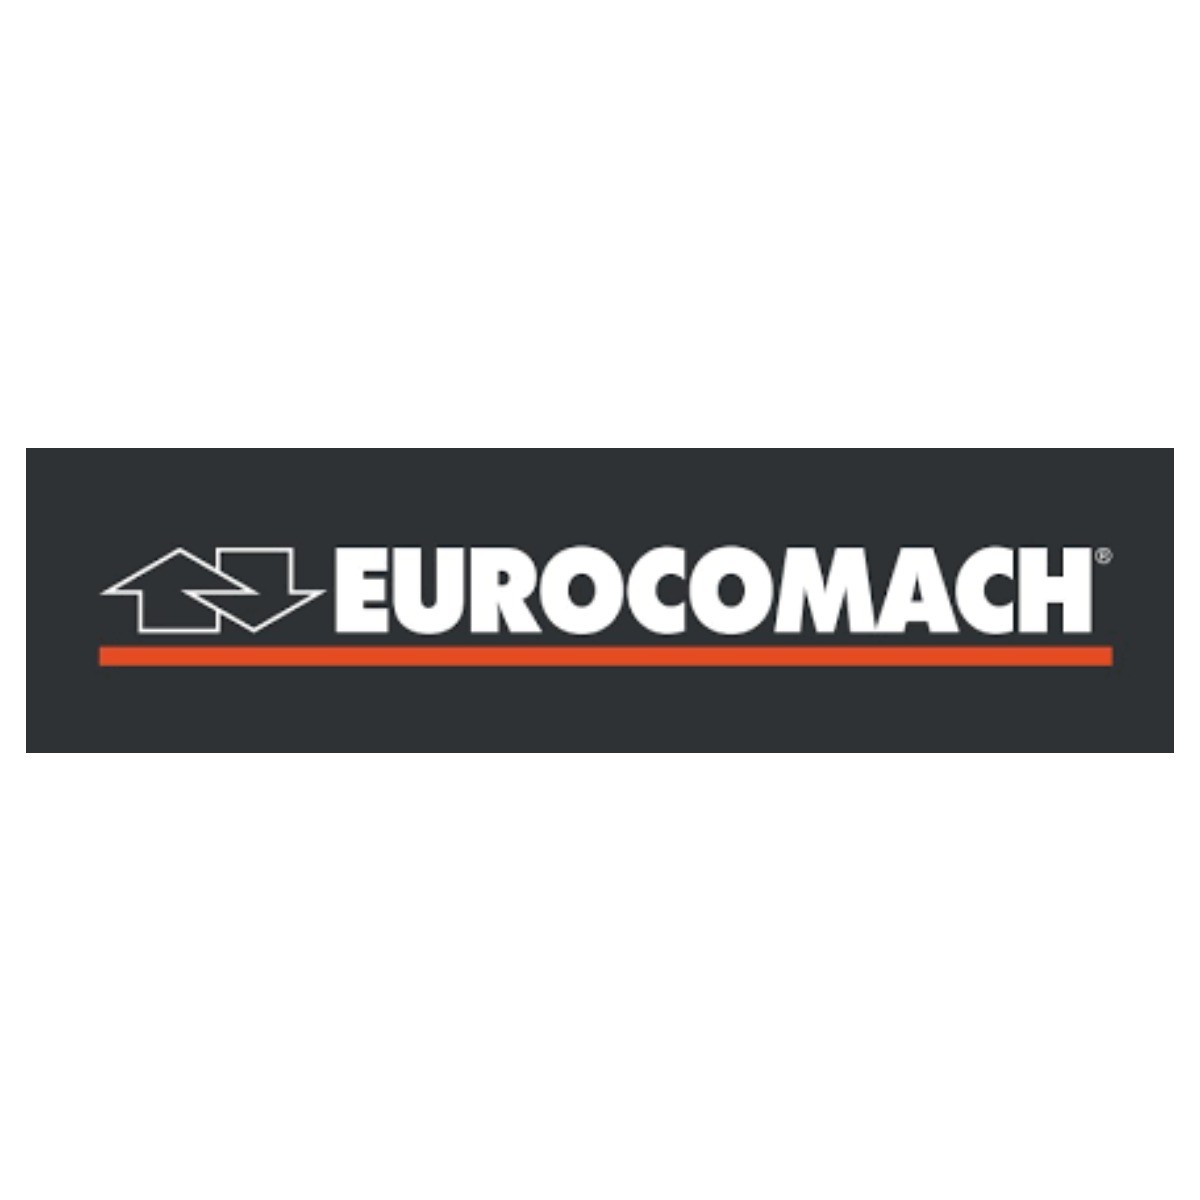 Eurocomach